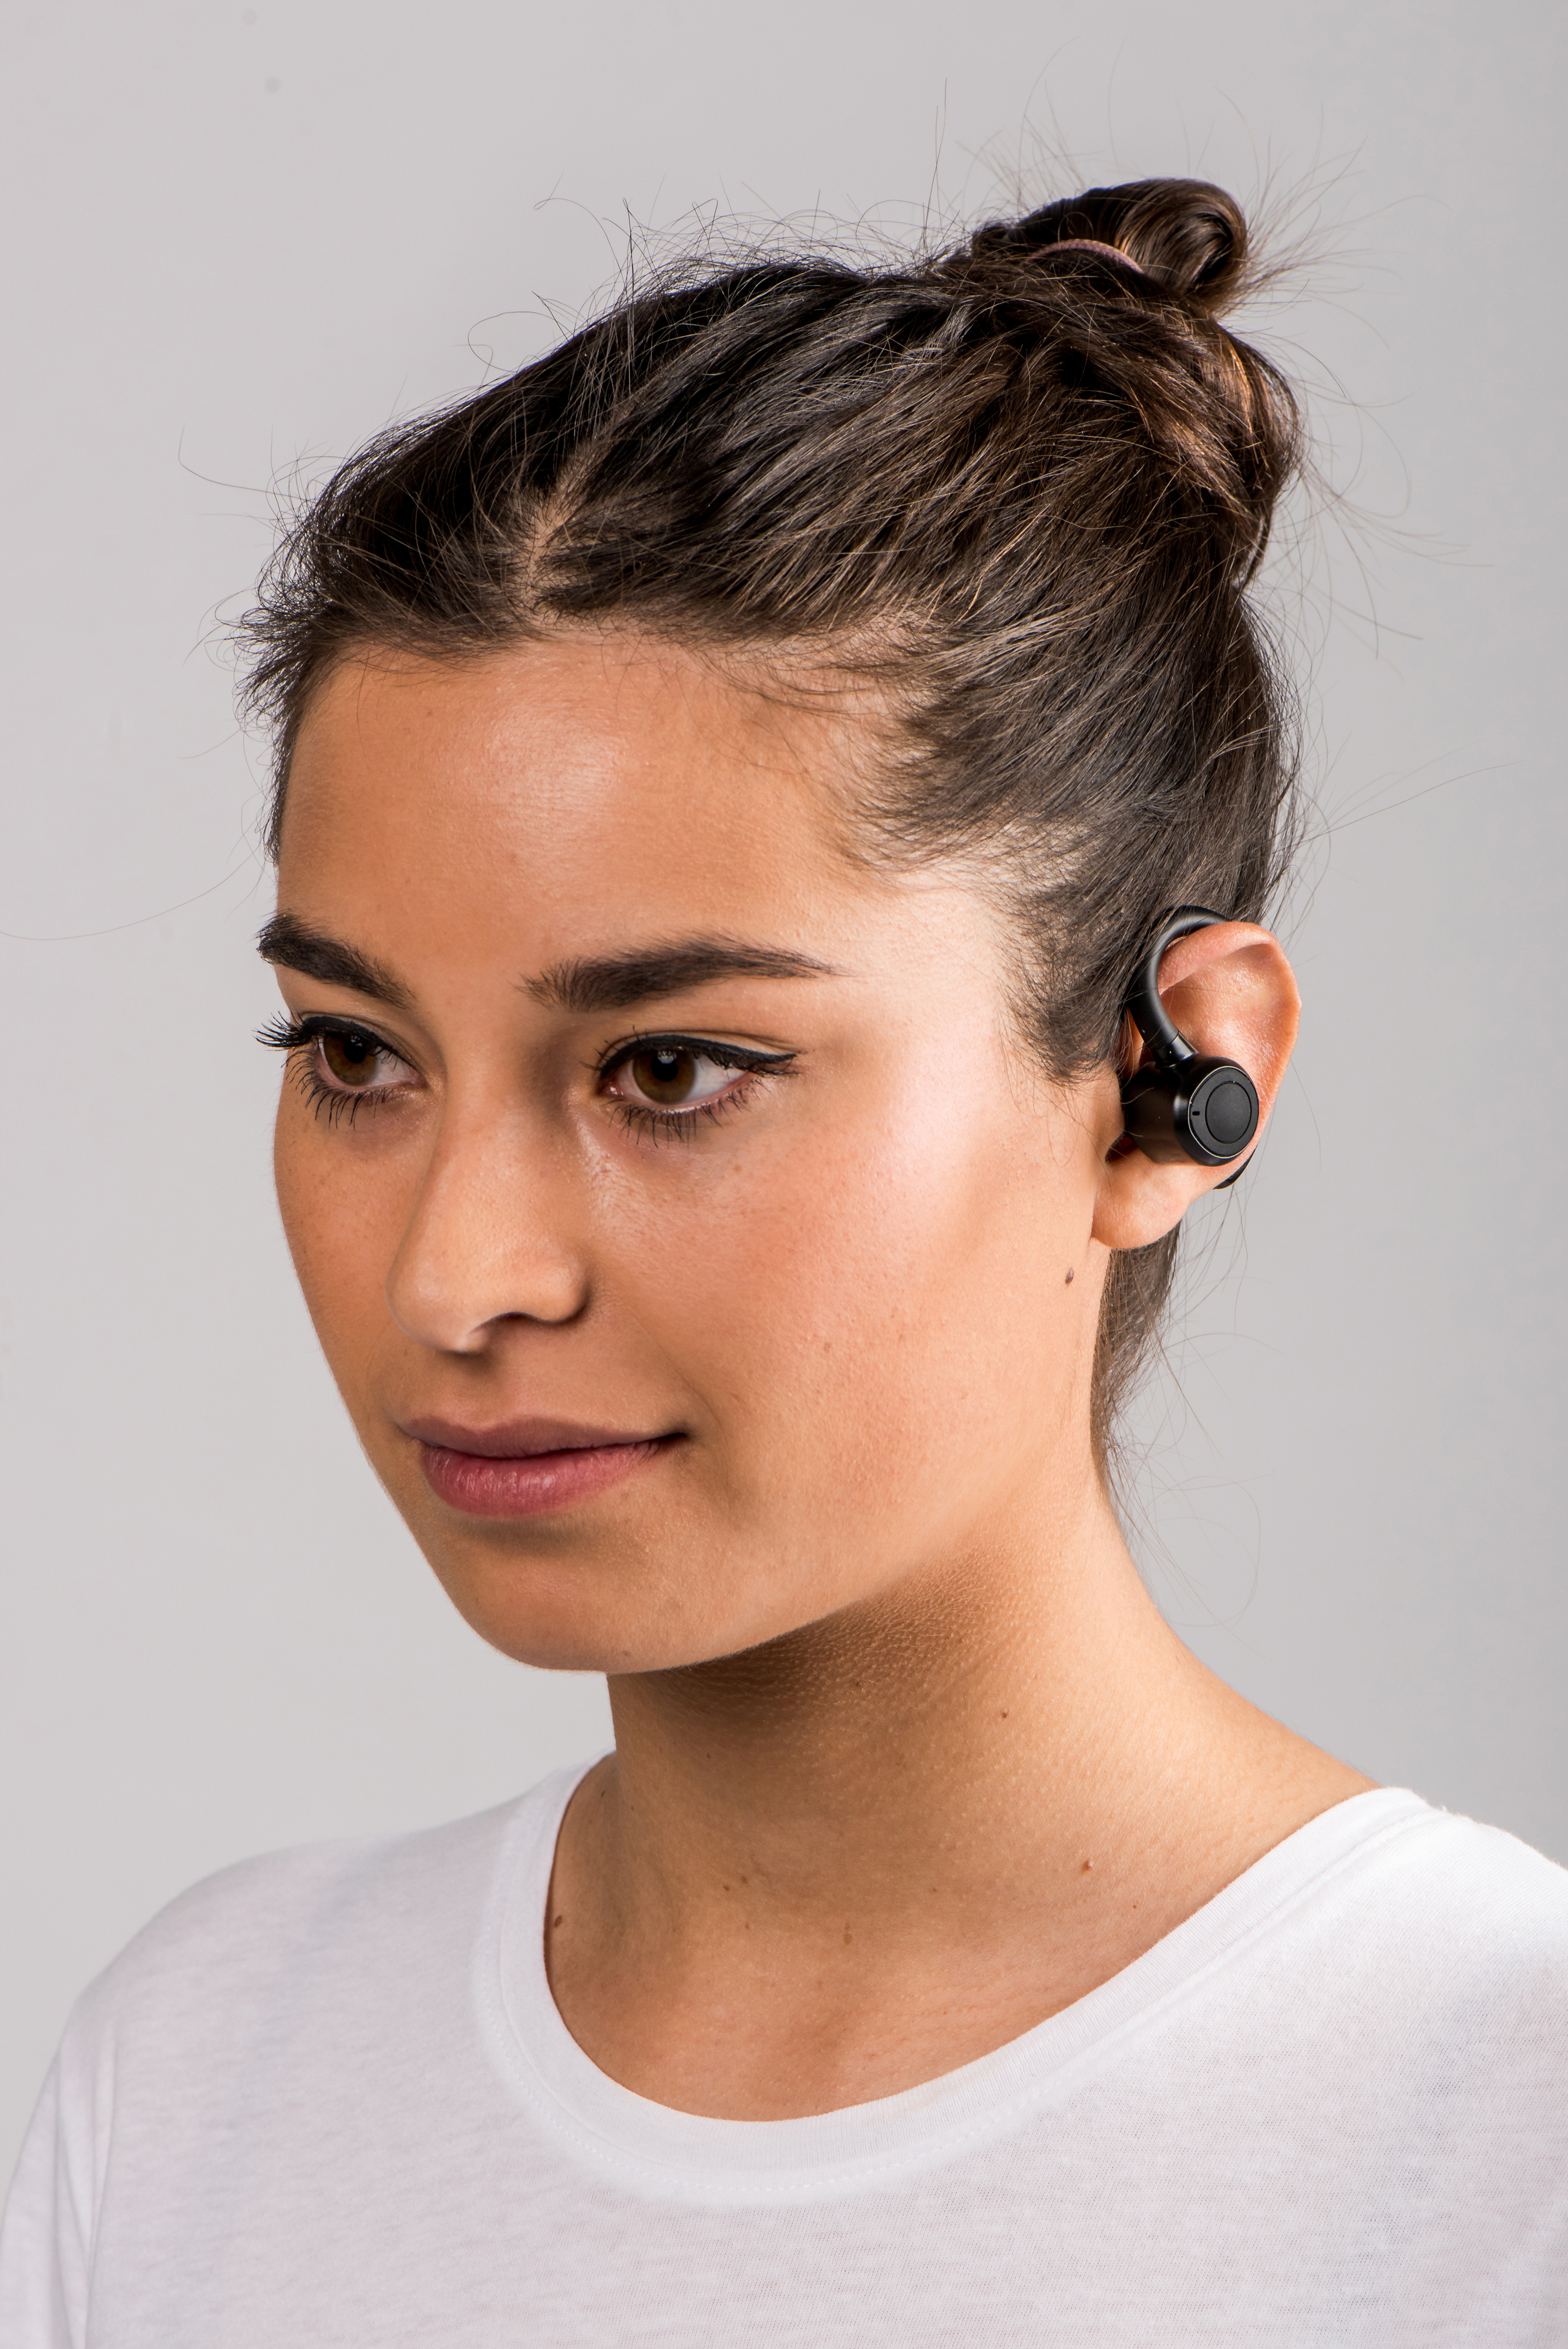 - TWS EPB-460BK Bluetooth LENCO In-ear Headphone - IPX5 -, Bluetooth Schwarz